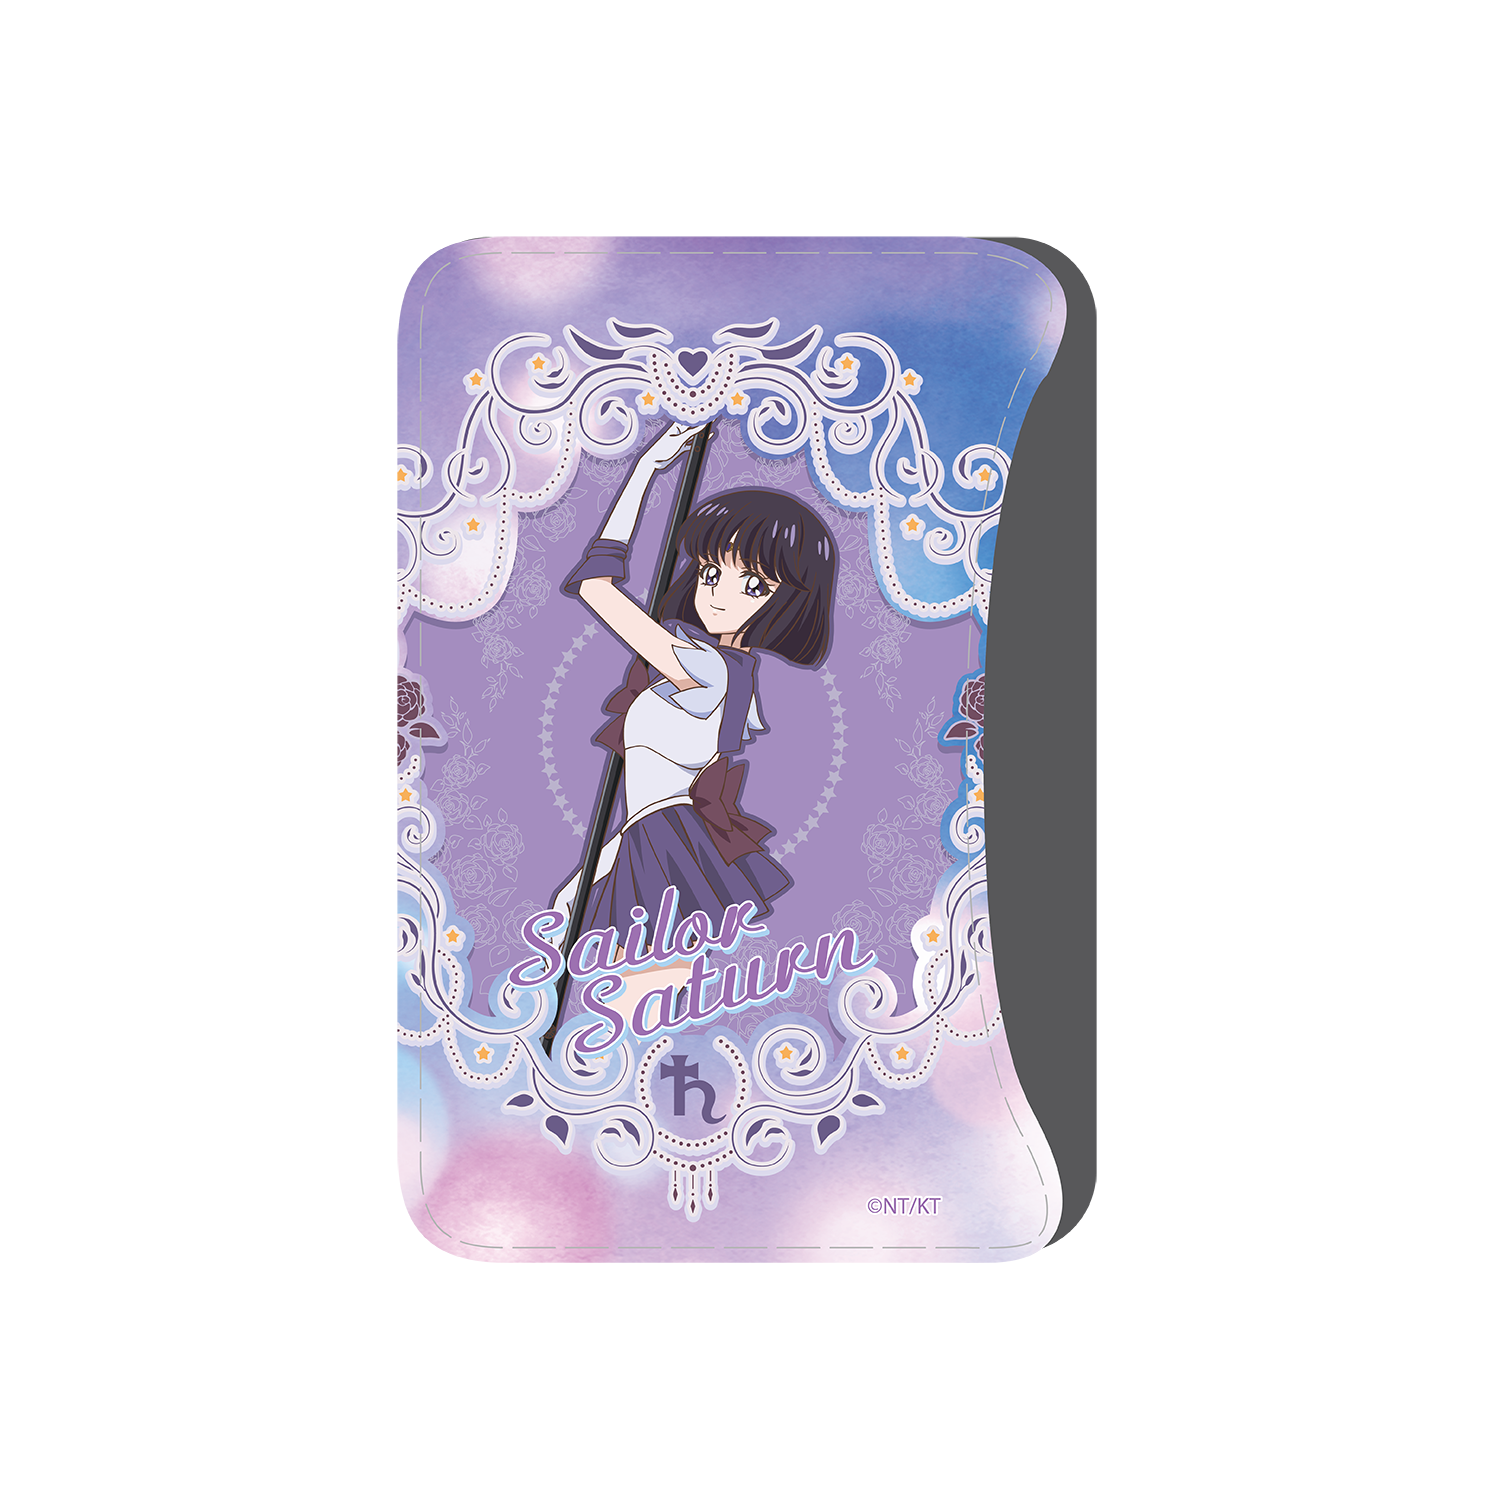 Sailor Moon 美少女戰士 Magsafe Card Holder & Phone Stand (SA94cc)